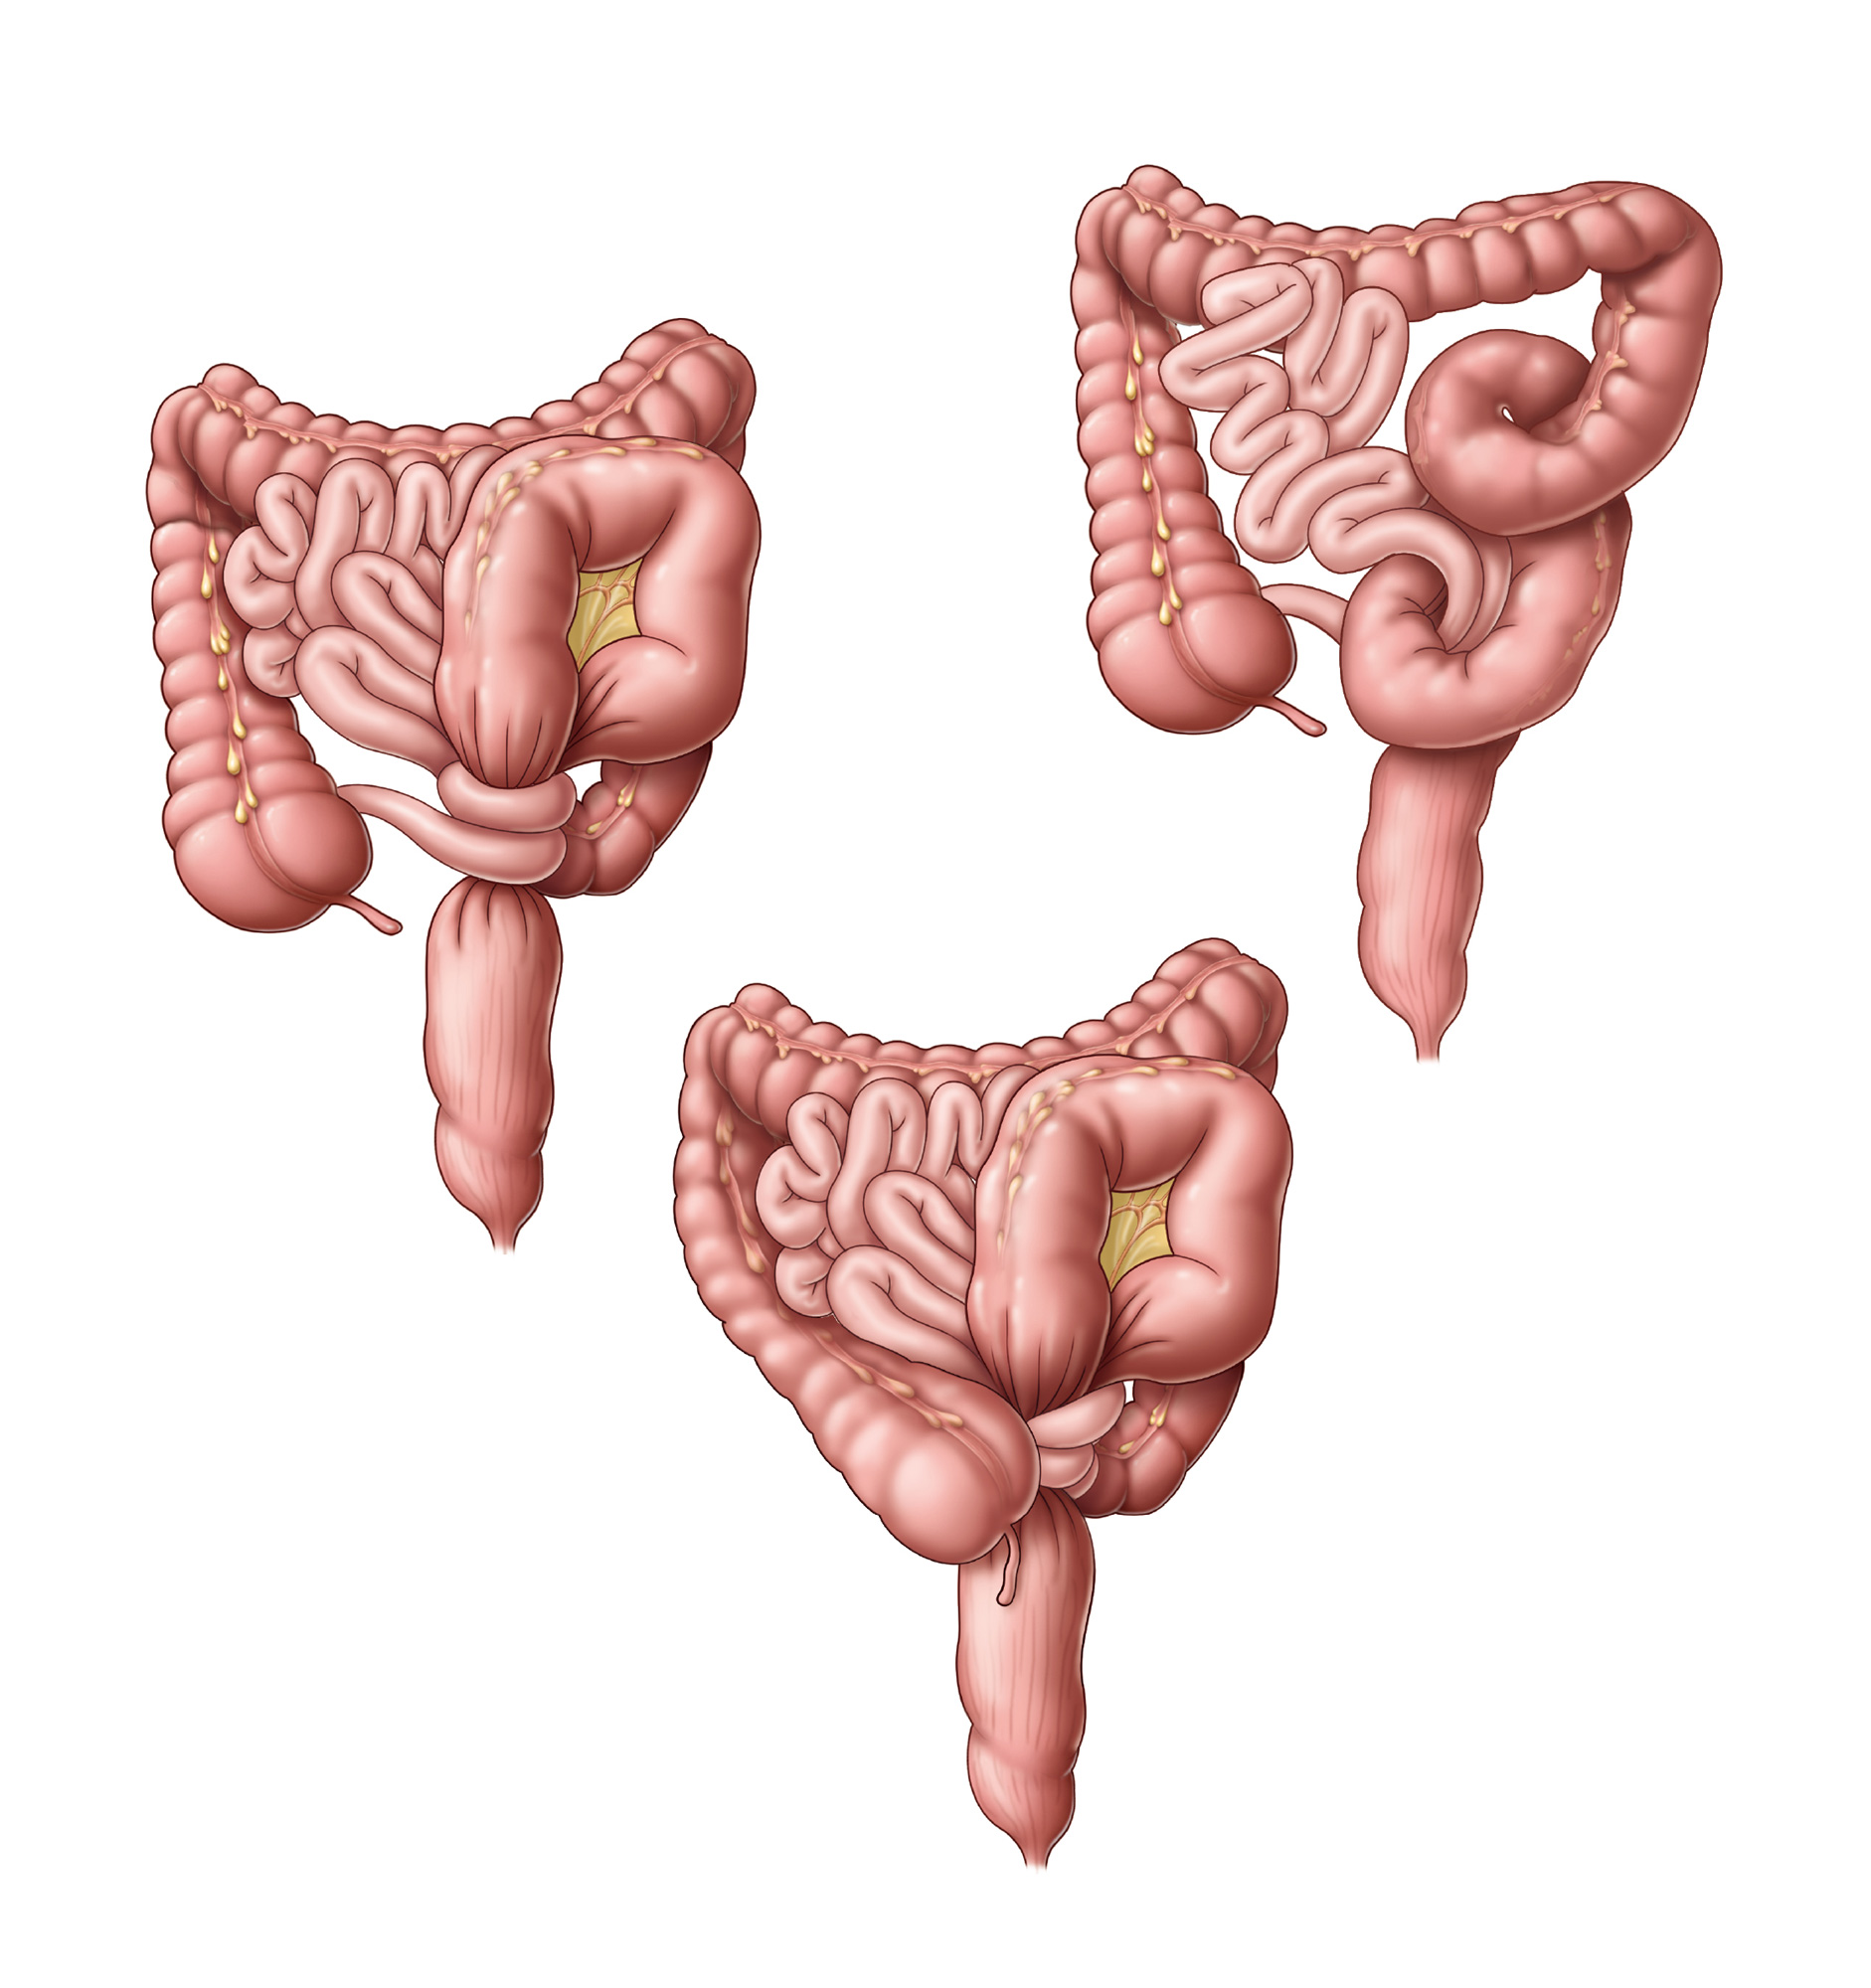 Bowel obstruction (volvulus)